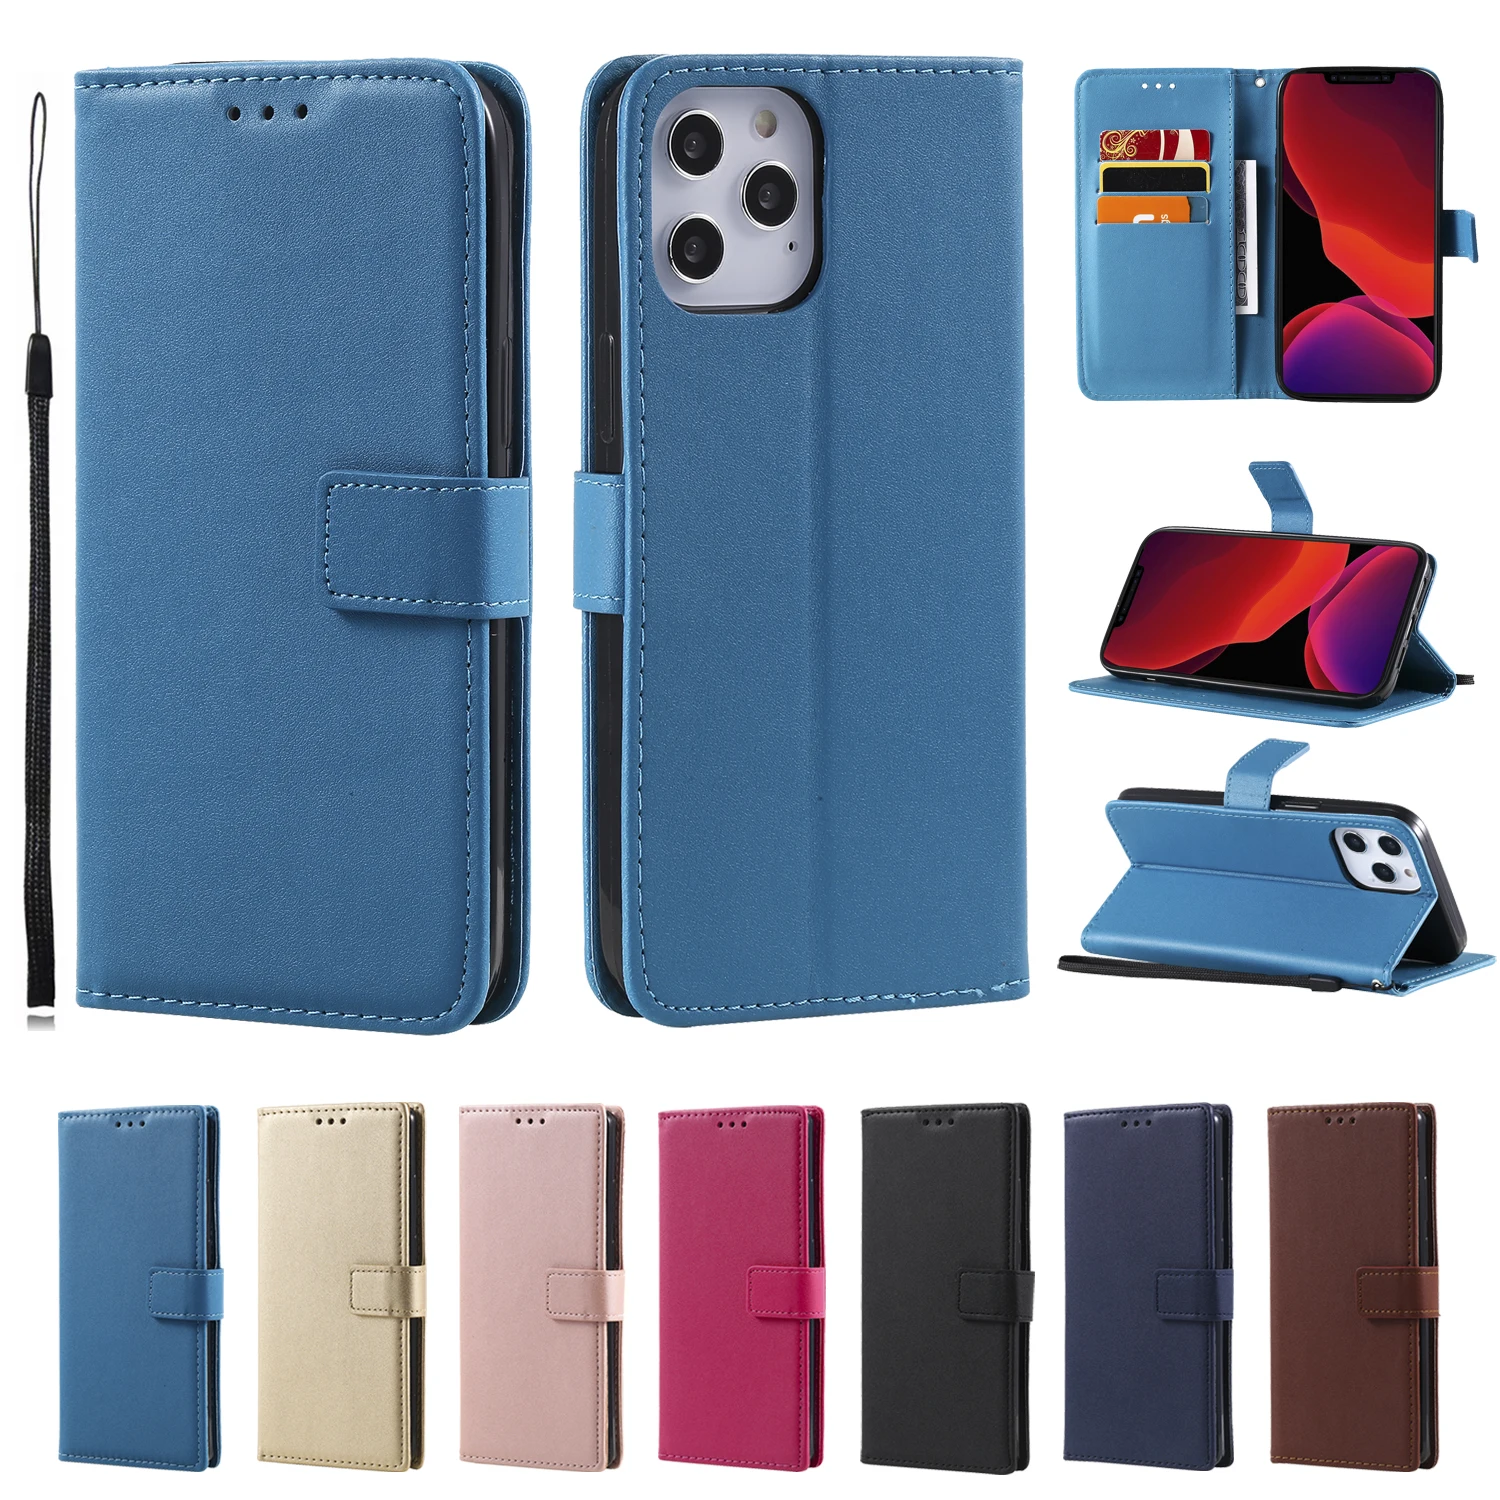 

PU Leather Wallet Phone Case For LG K8 K10 2017 V10 V20 V30 LG Q6 G3 G4 G5 G6 XPower C40 C70 Flip Card Slots Holder Stand Cover